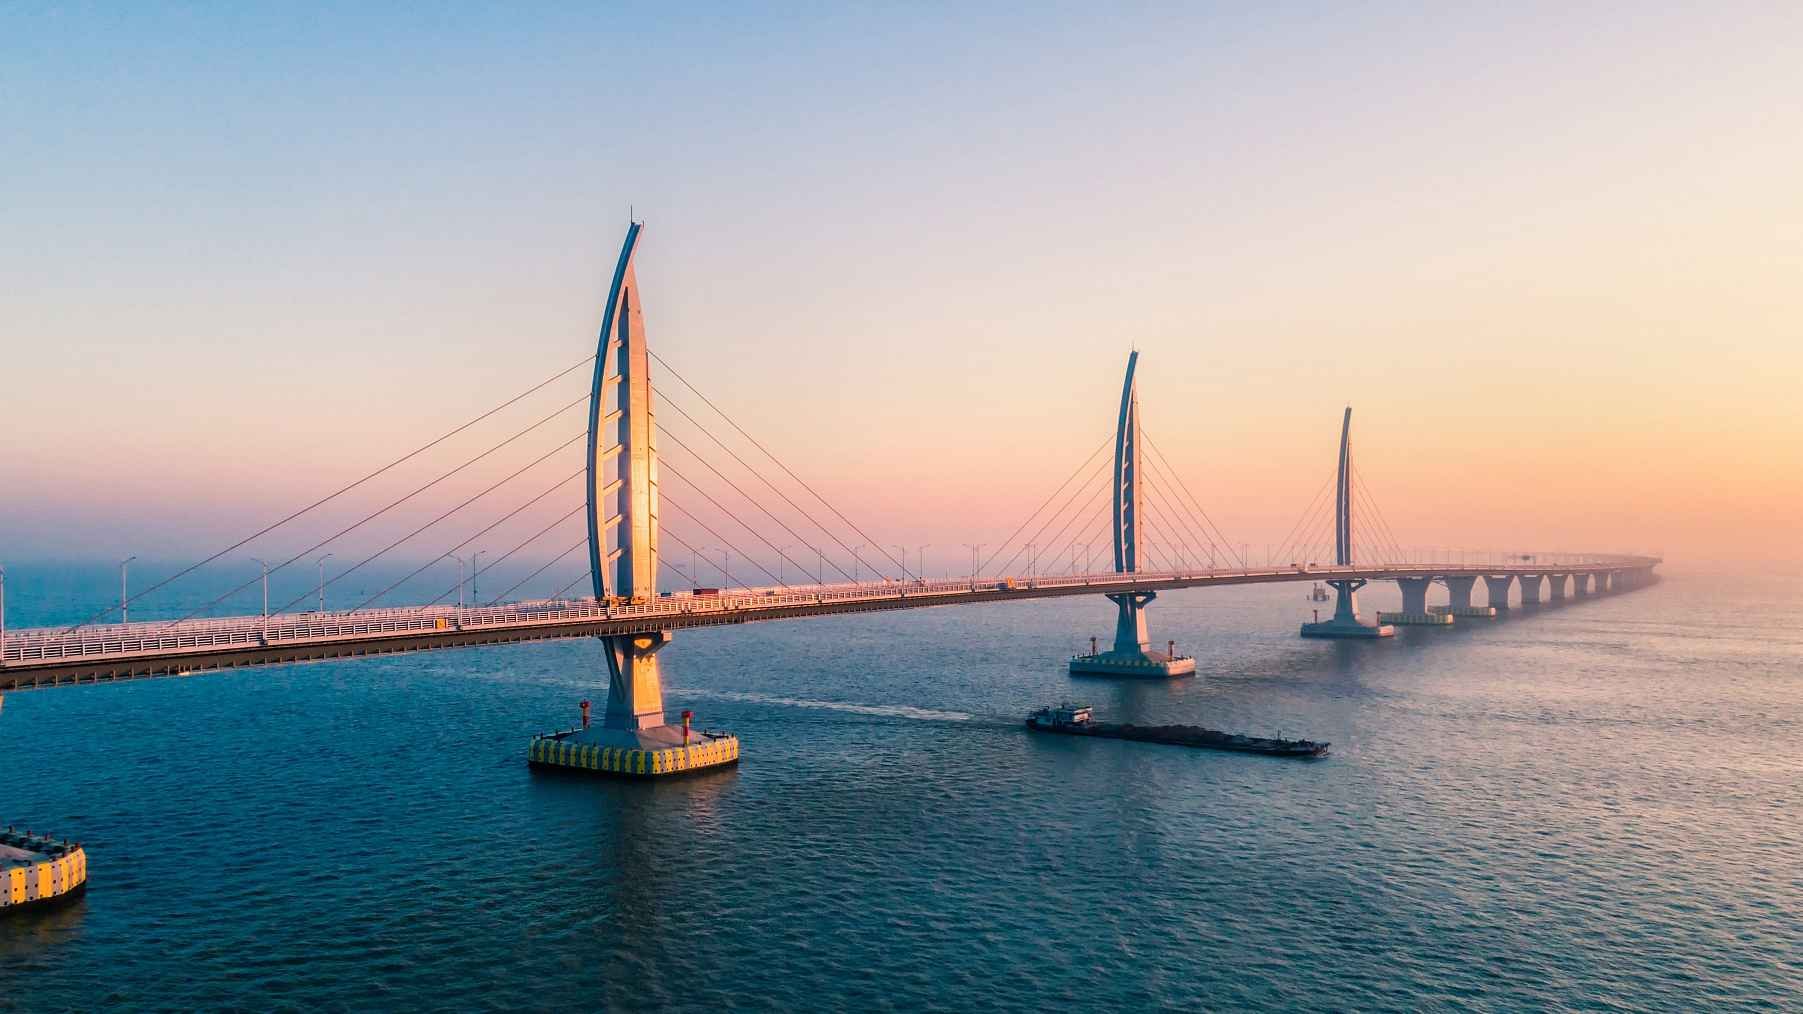 More information about "HKZM Bridge: Σε λειτουργία η μεγαλύτερη θαλάσσια γέφυρα του κόσμου μήκους 55 χλμ."